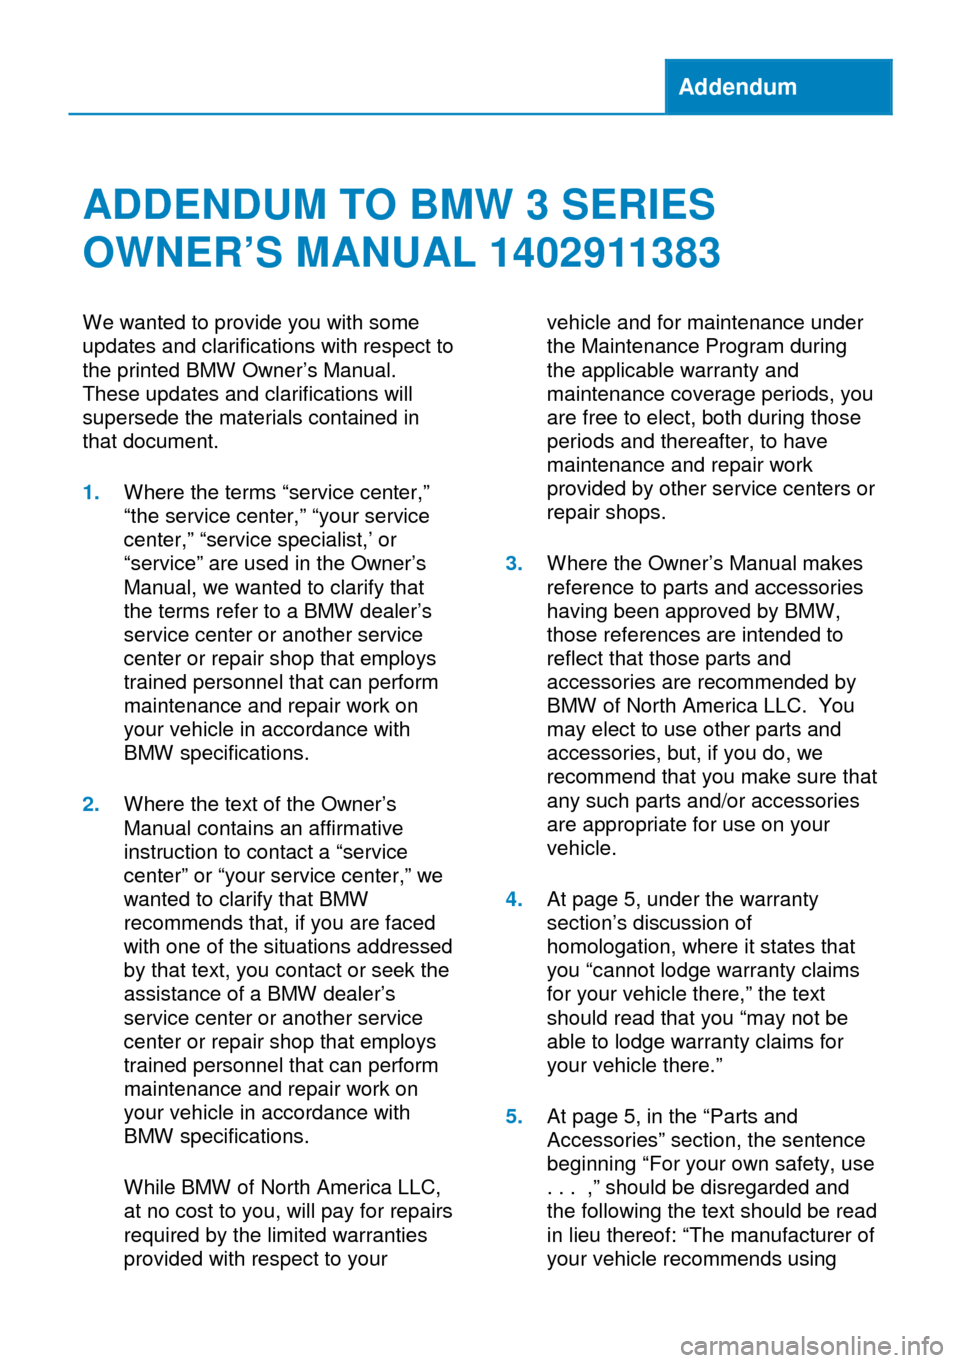 bmw 3 series owners manual pdf